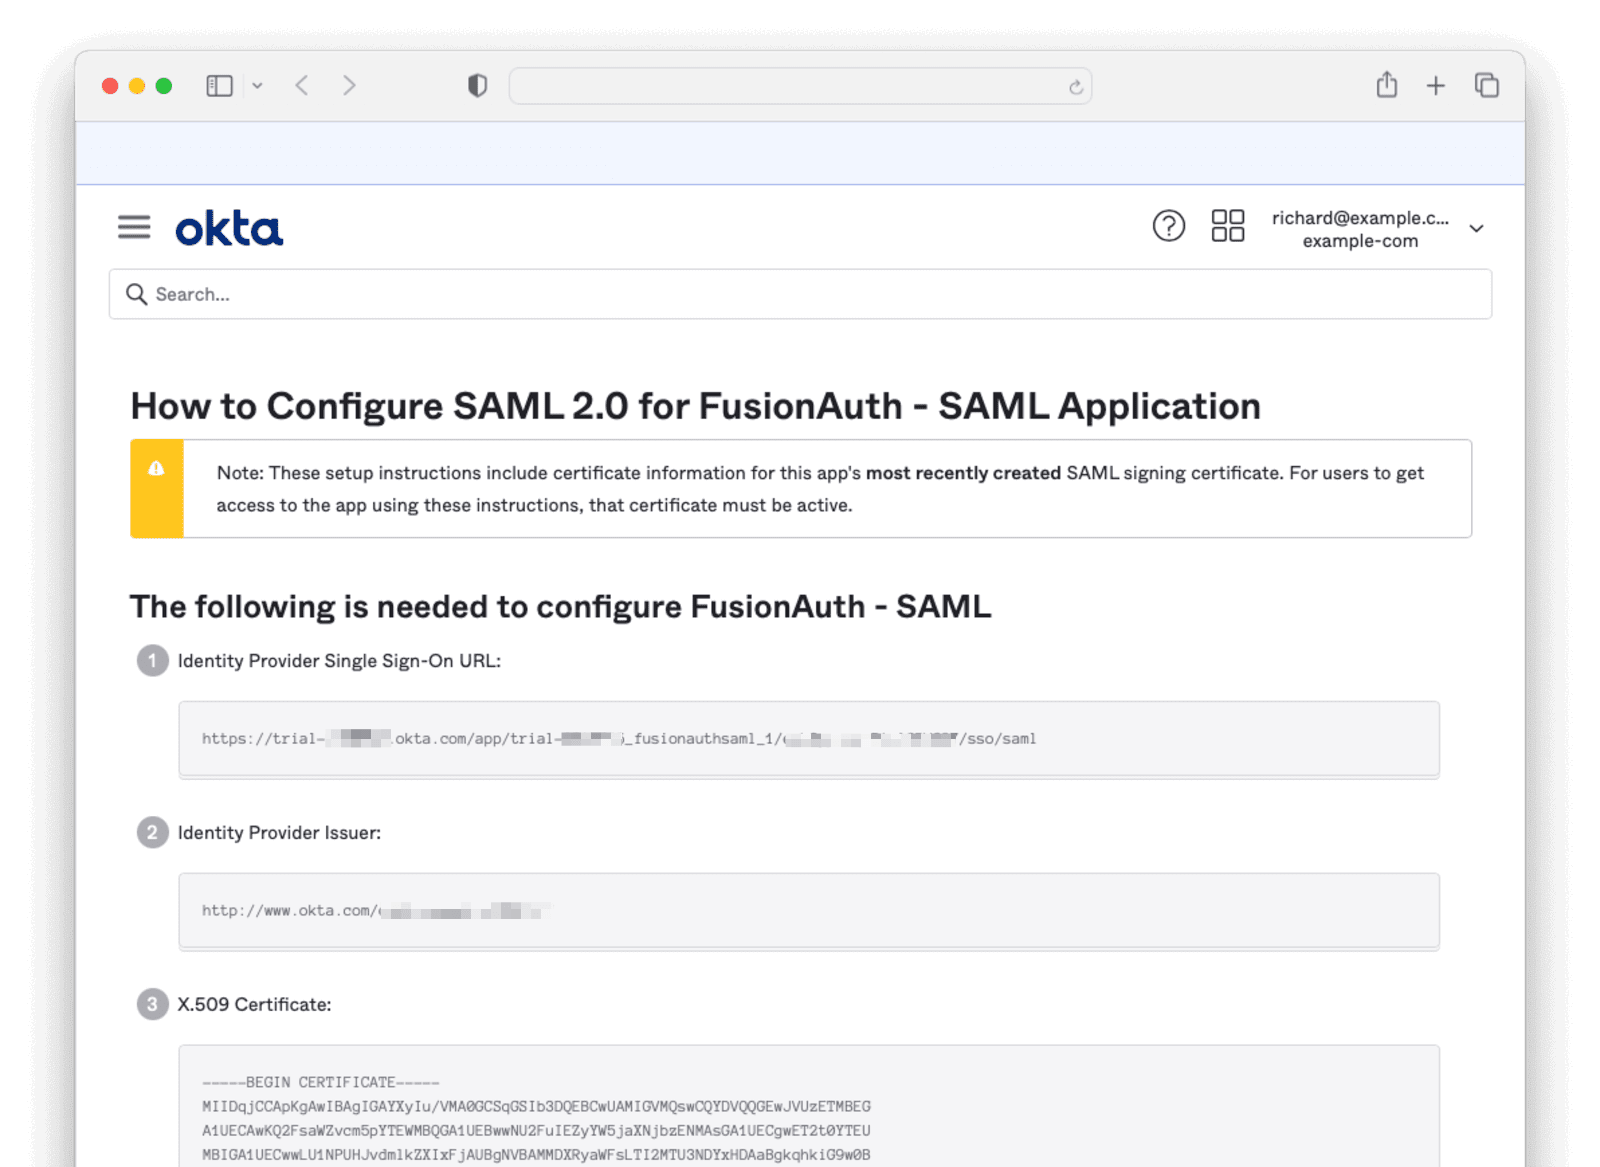 saml configuration details